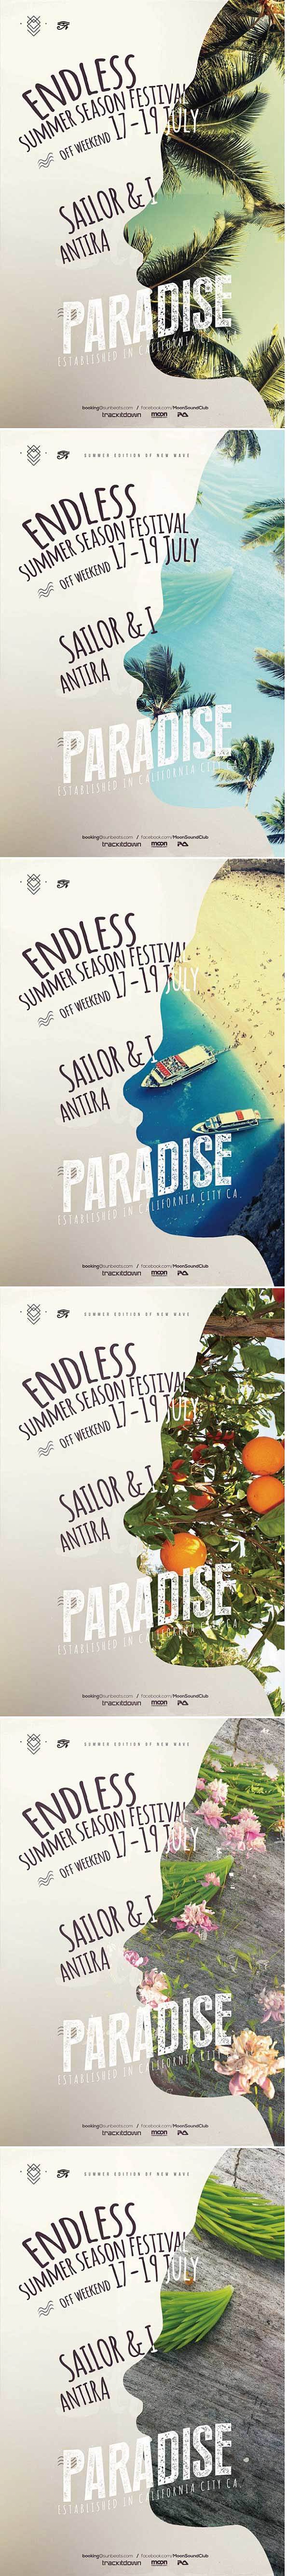 PARADISE夏日乐园系列创意海报